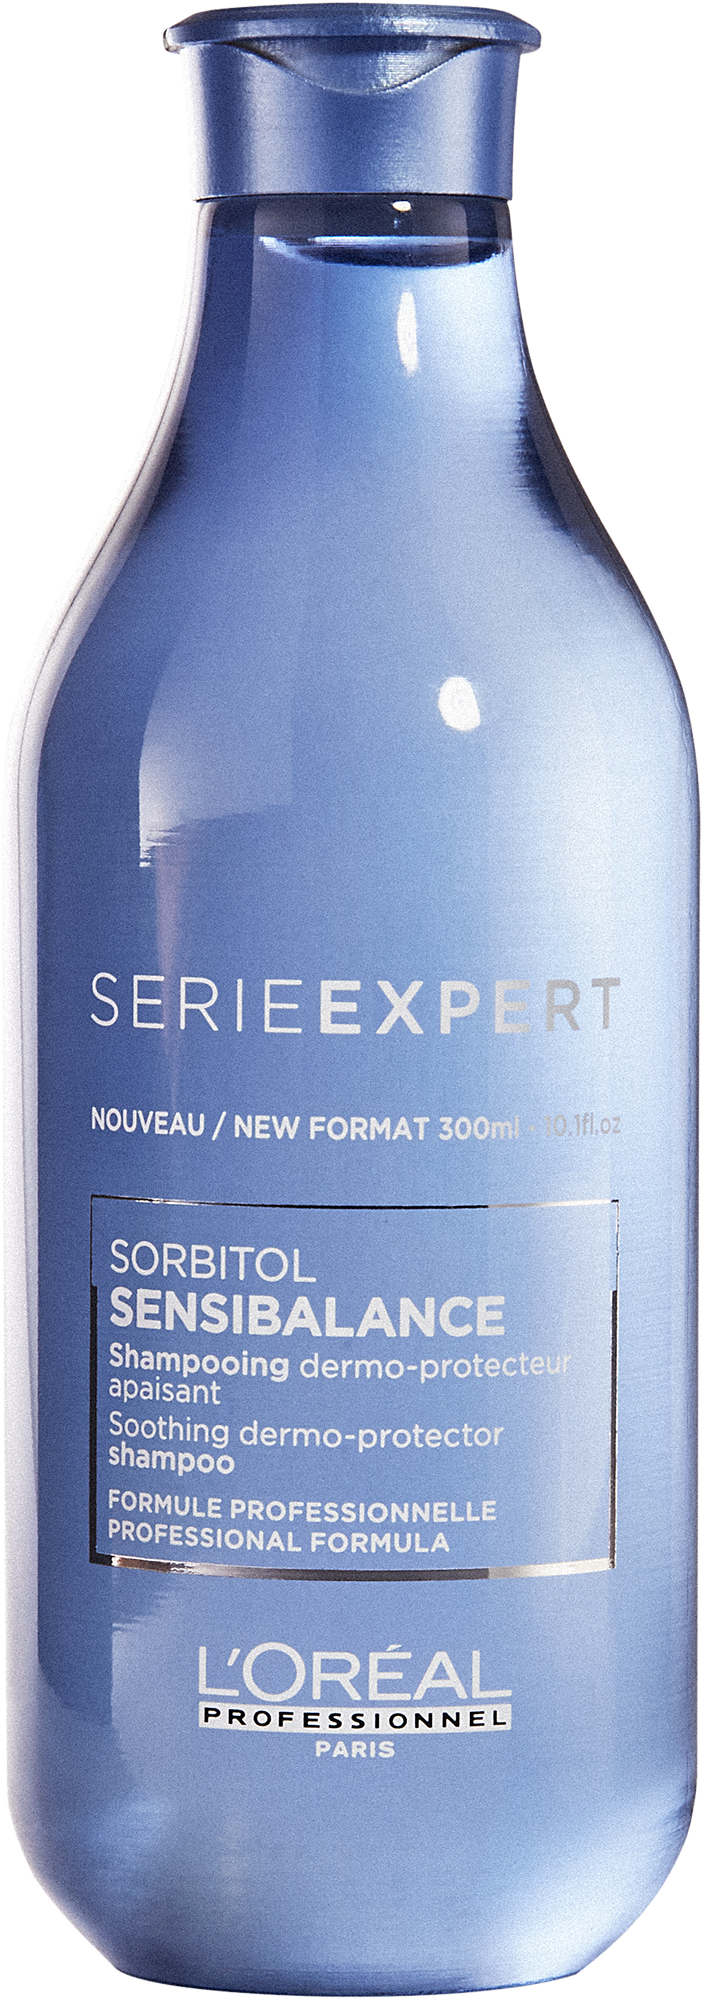 SERIE EXPERT | SENSIBALANCE ***Soothing Dermo-Protector Shampoo